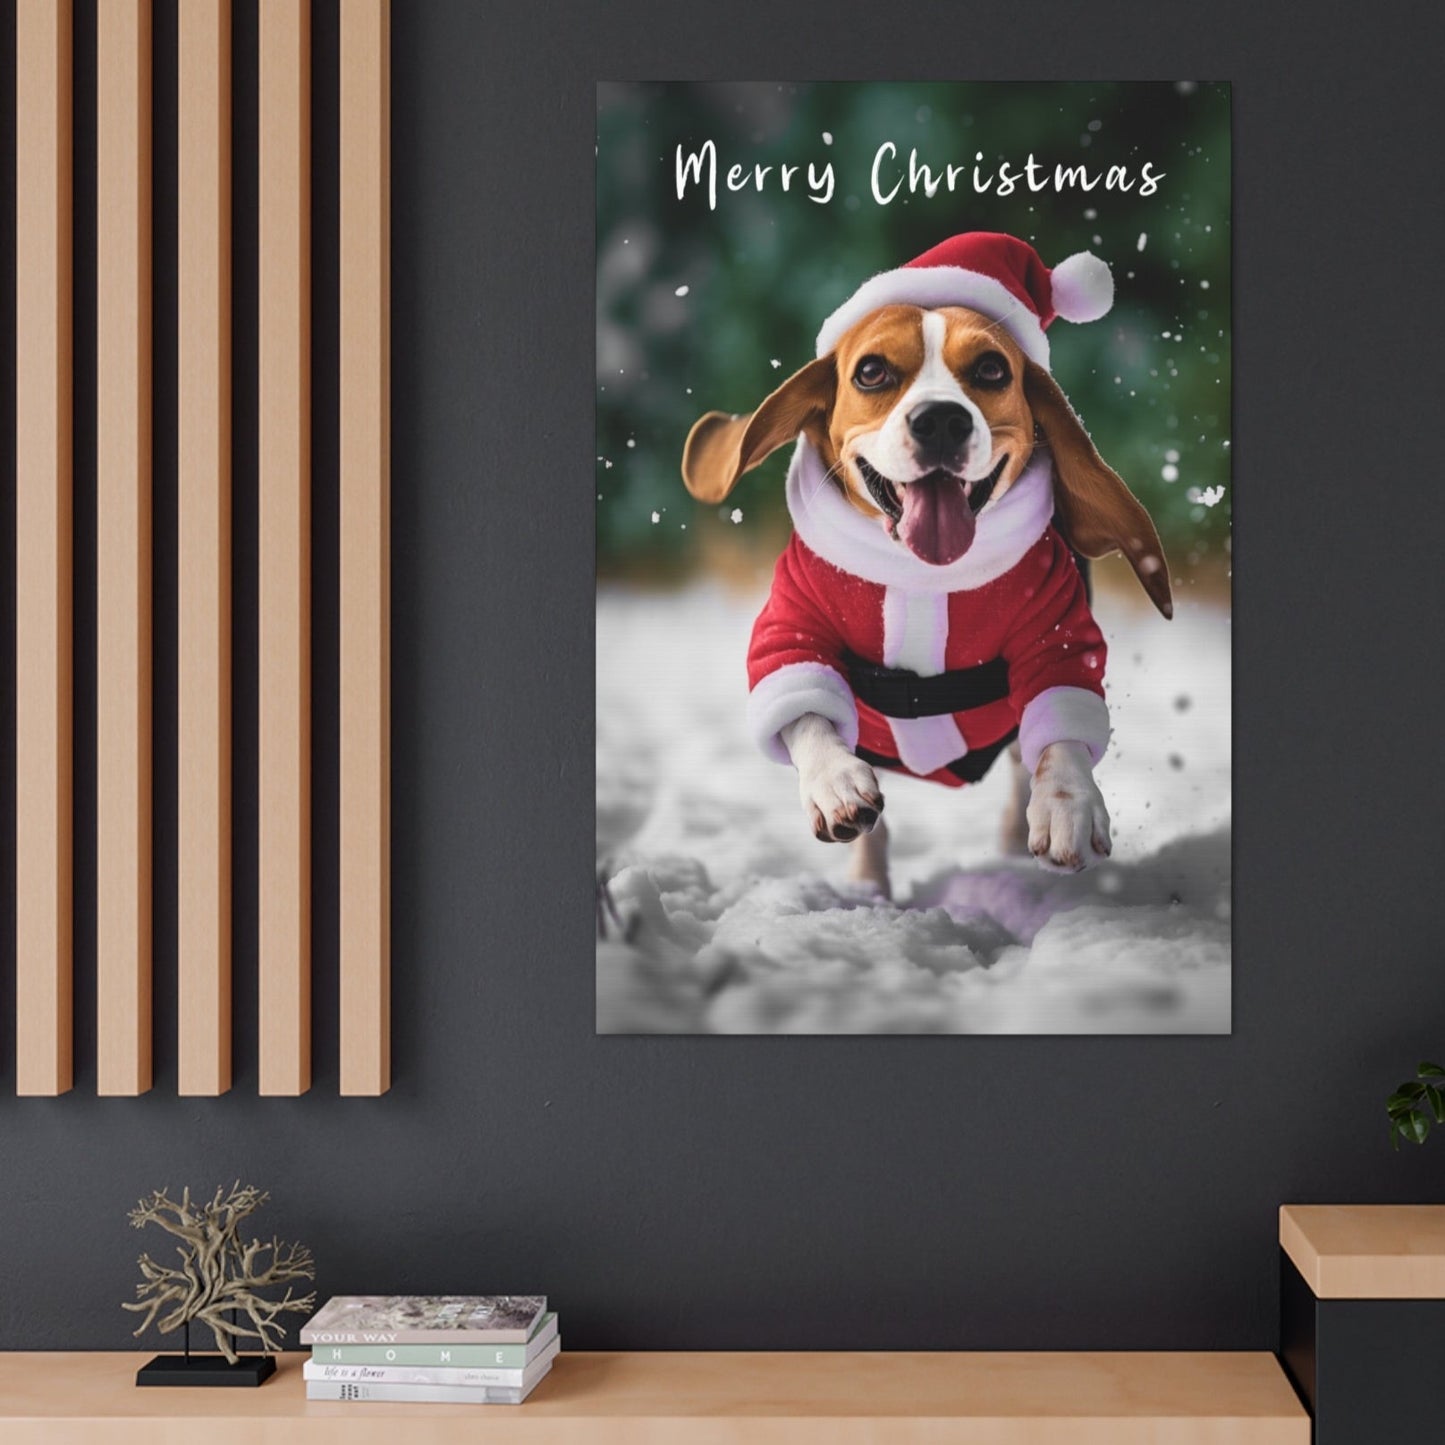 Merry Christmas Beagles wall decor